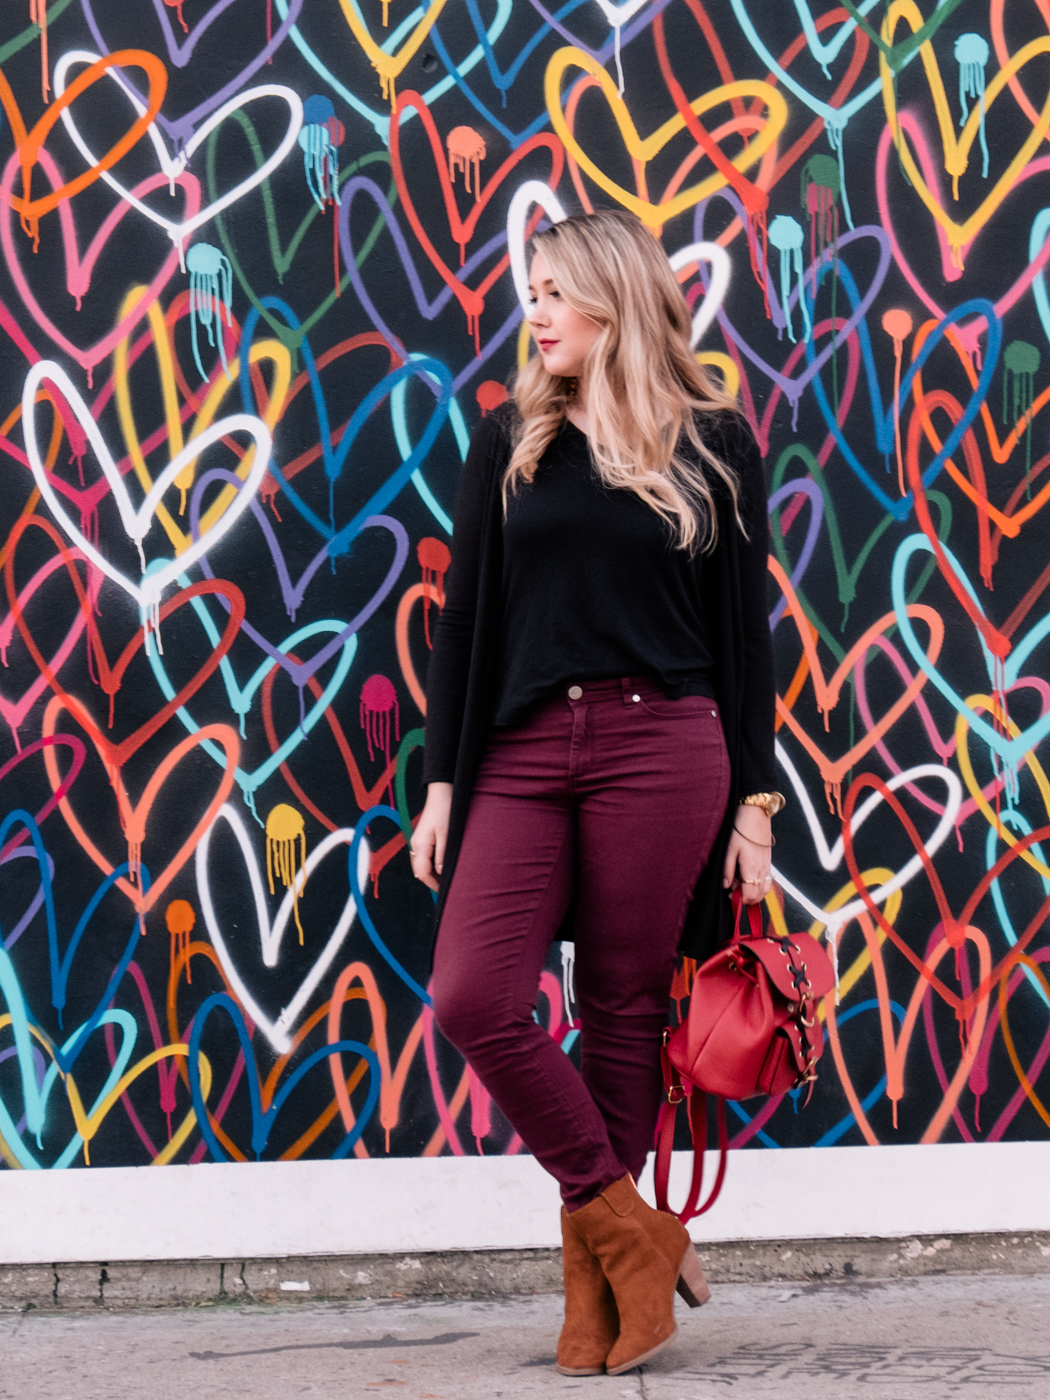 Debora Dahl, Love wall, Venice Beach, Red backpack